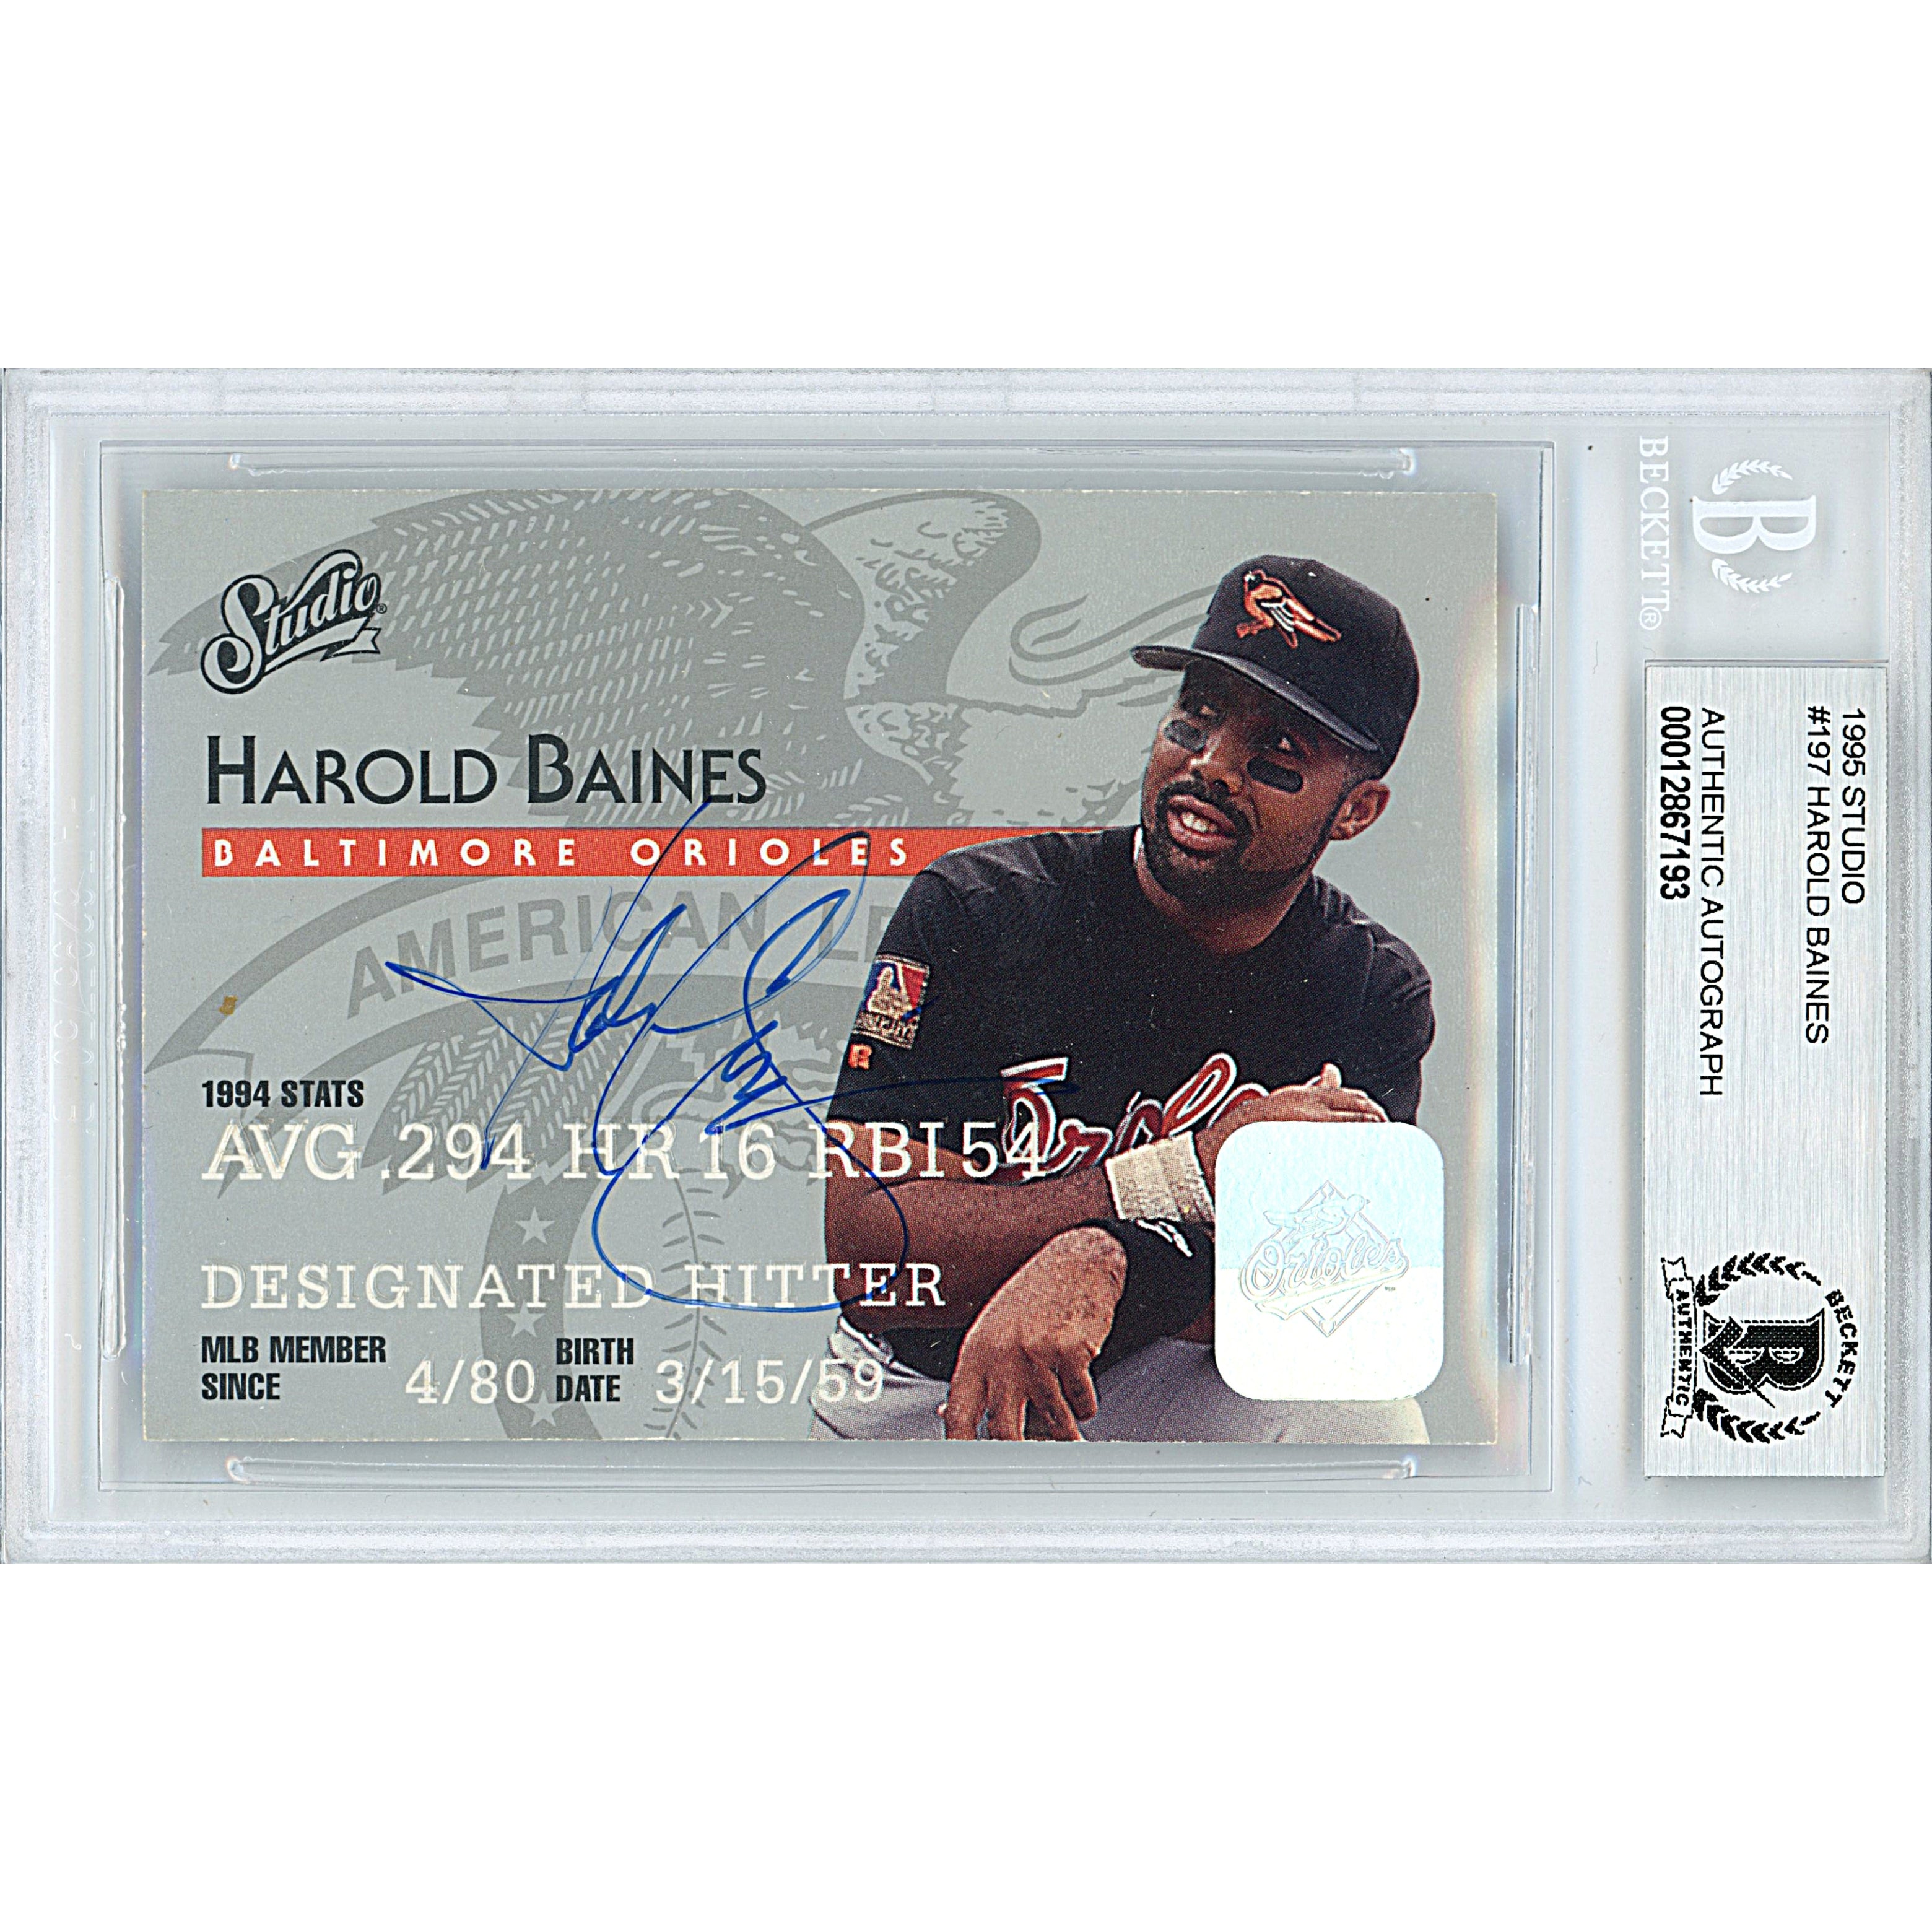 Harold Baines autographed baseball card (Oakland Athletics) 1991